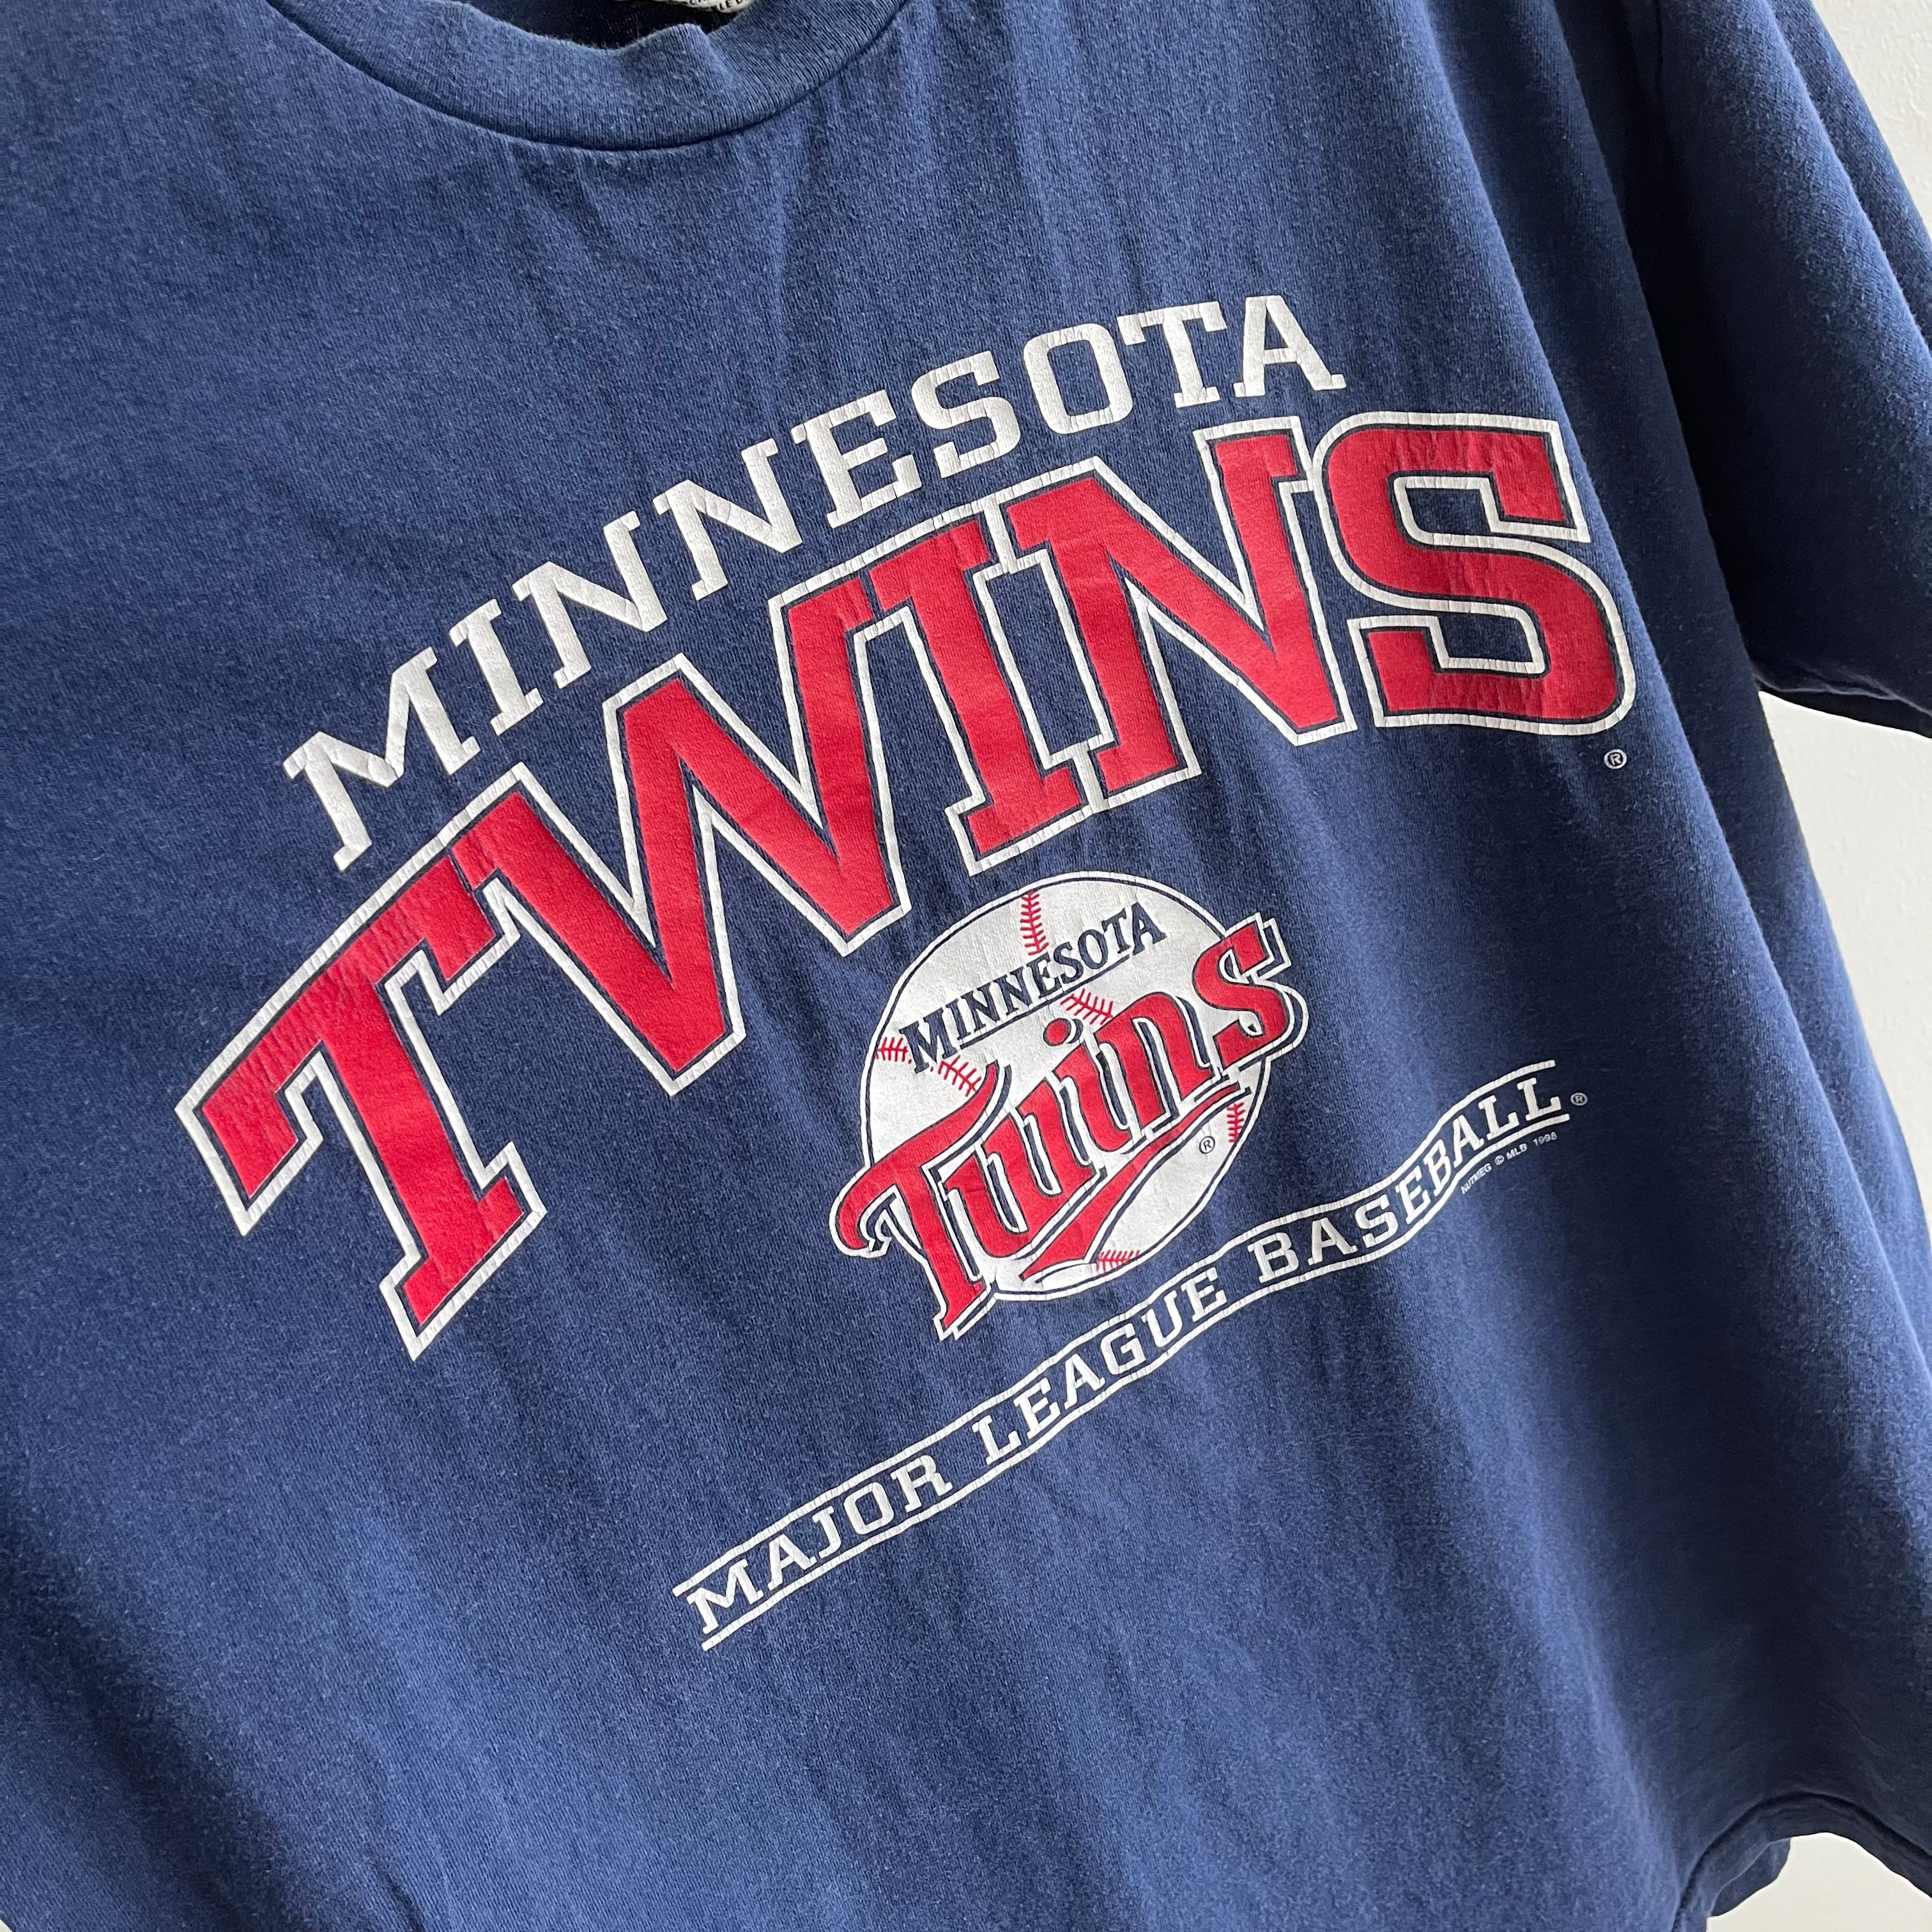 Vintage Minnesota Twins T Shirt